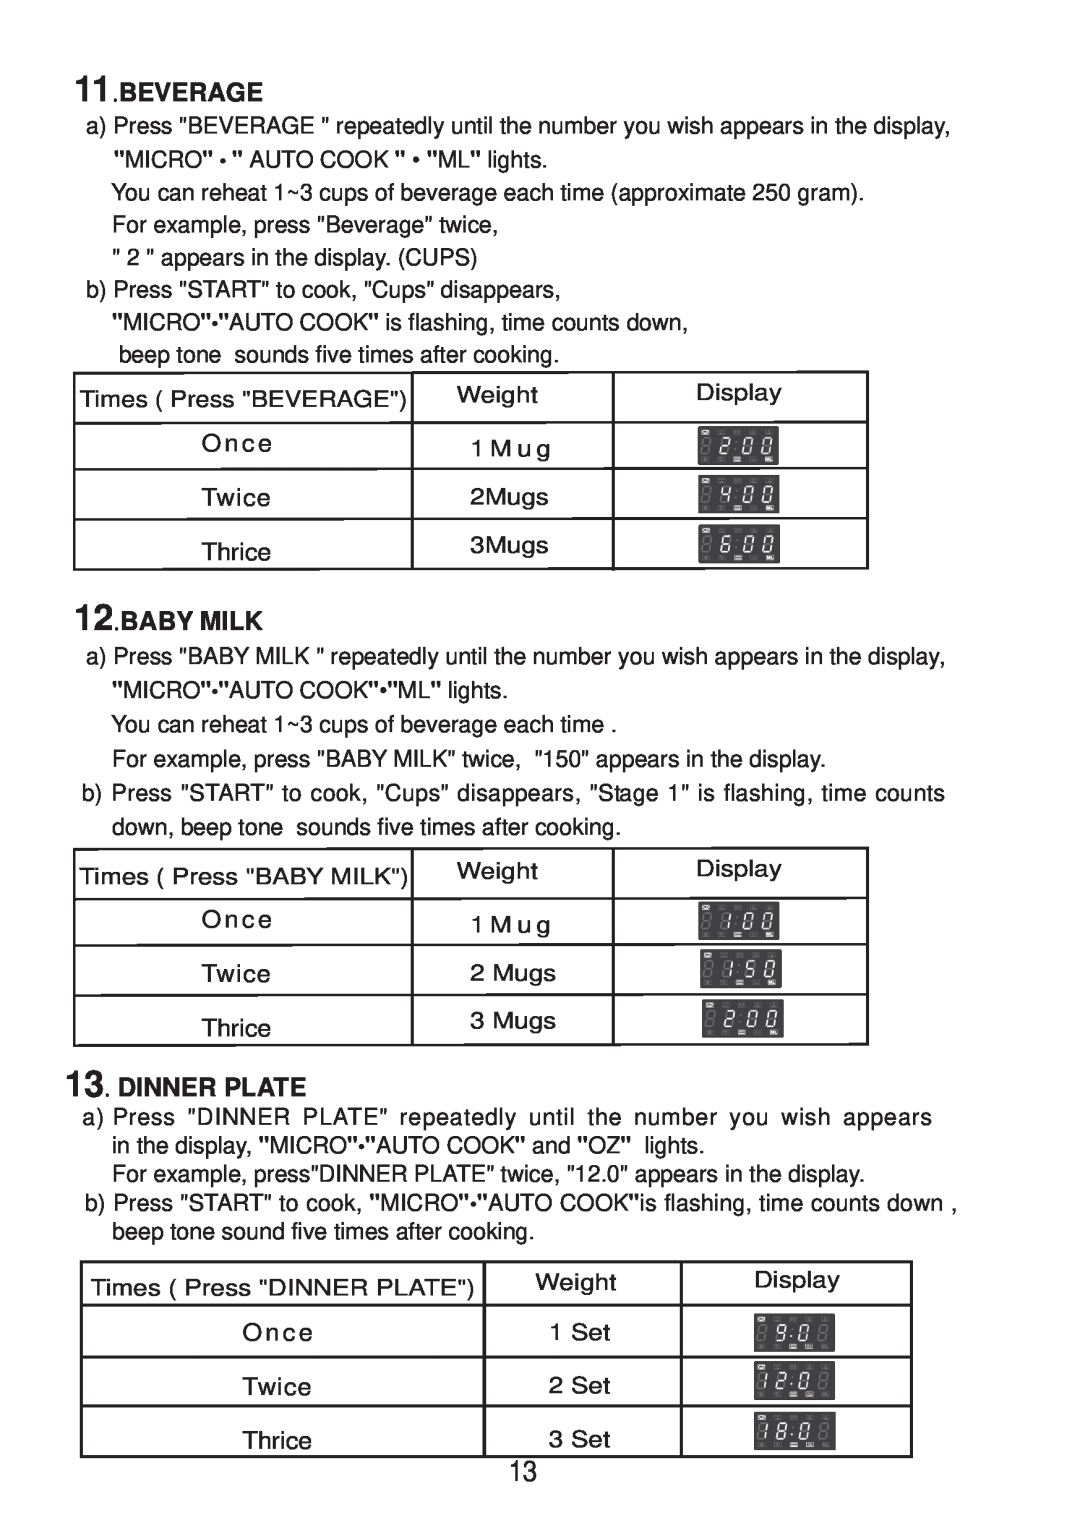 Sunbeam SMW730 instruction manual Beverage, Baby Milk, Dinner Plate 